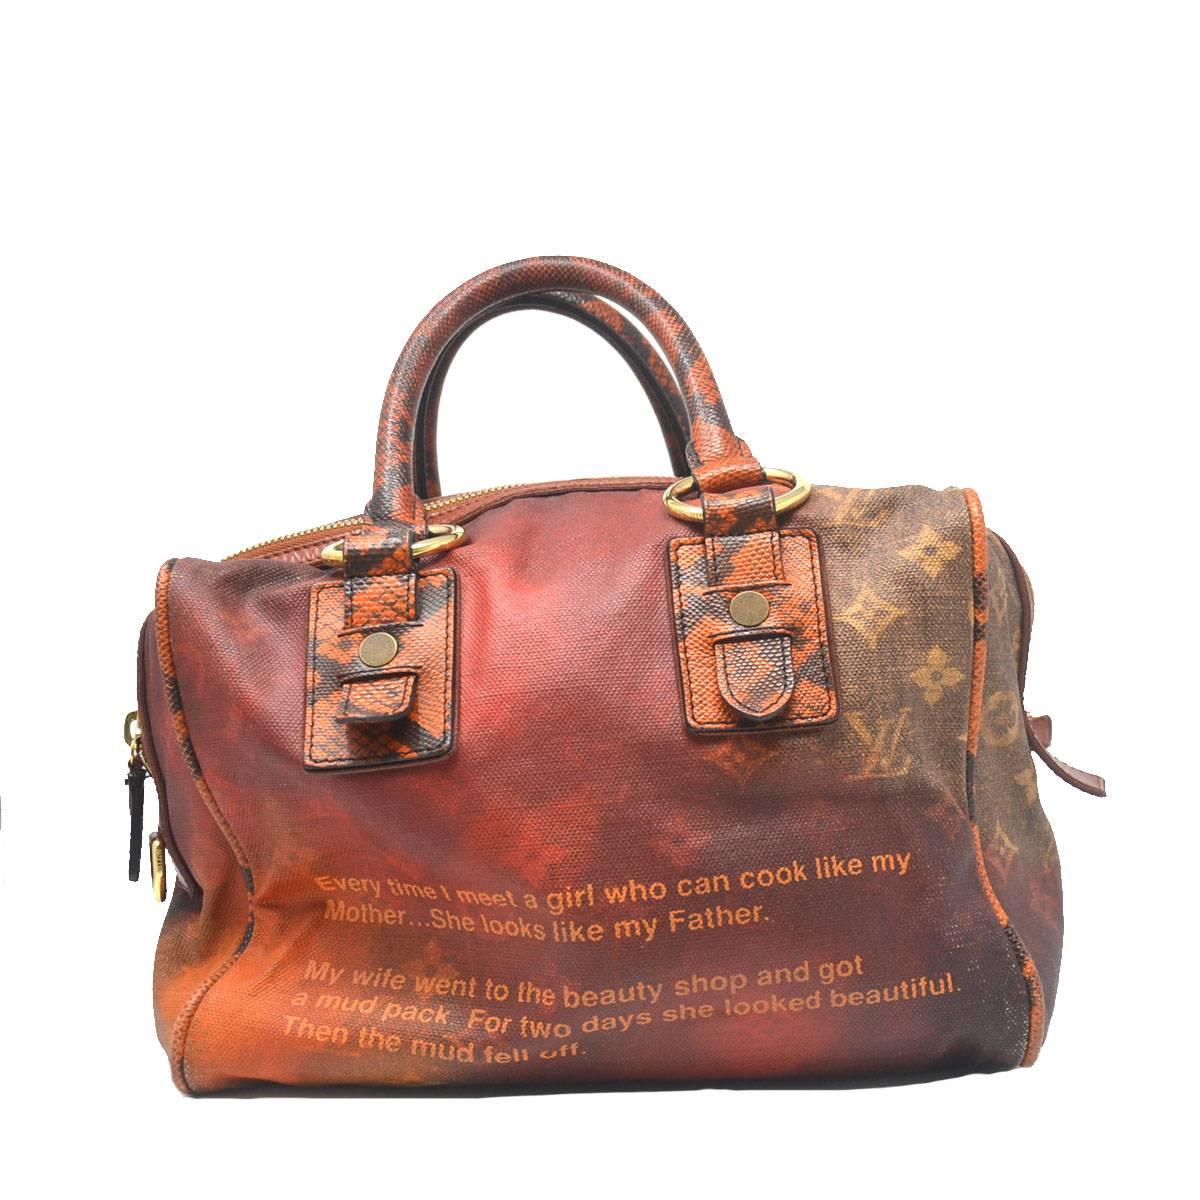 Louis Vuitton Richard Prince MANCRAZY Printemps Jokes Handbag